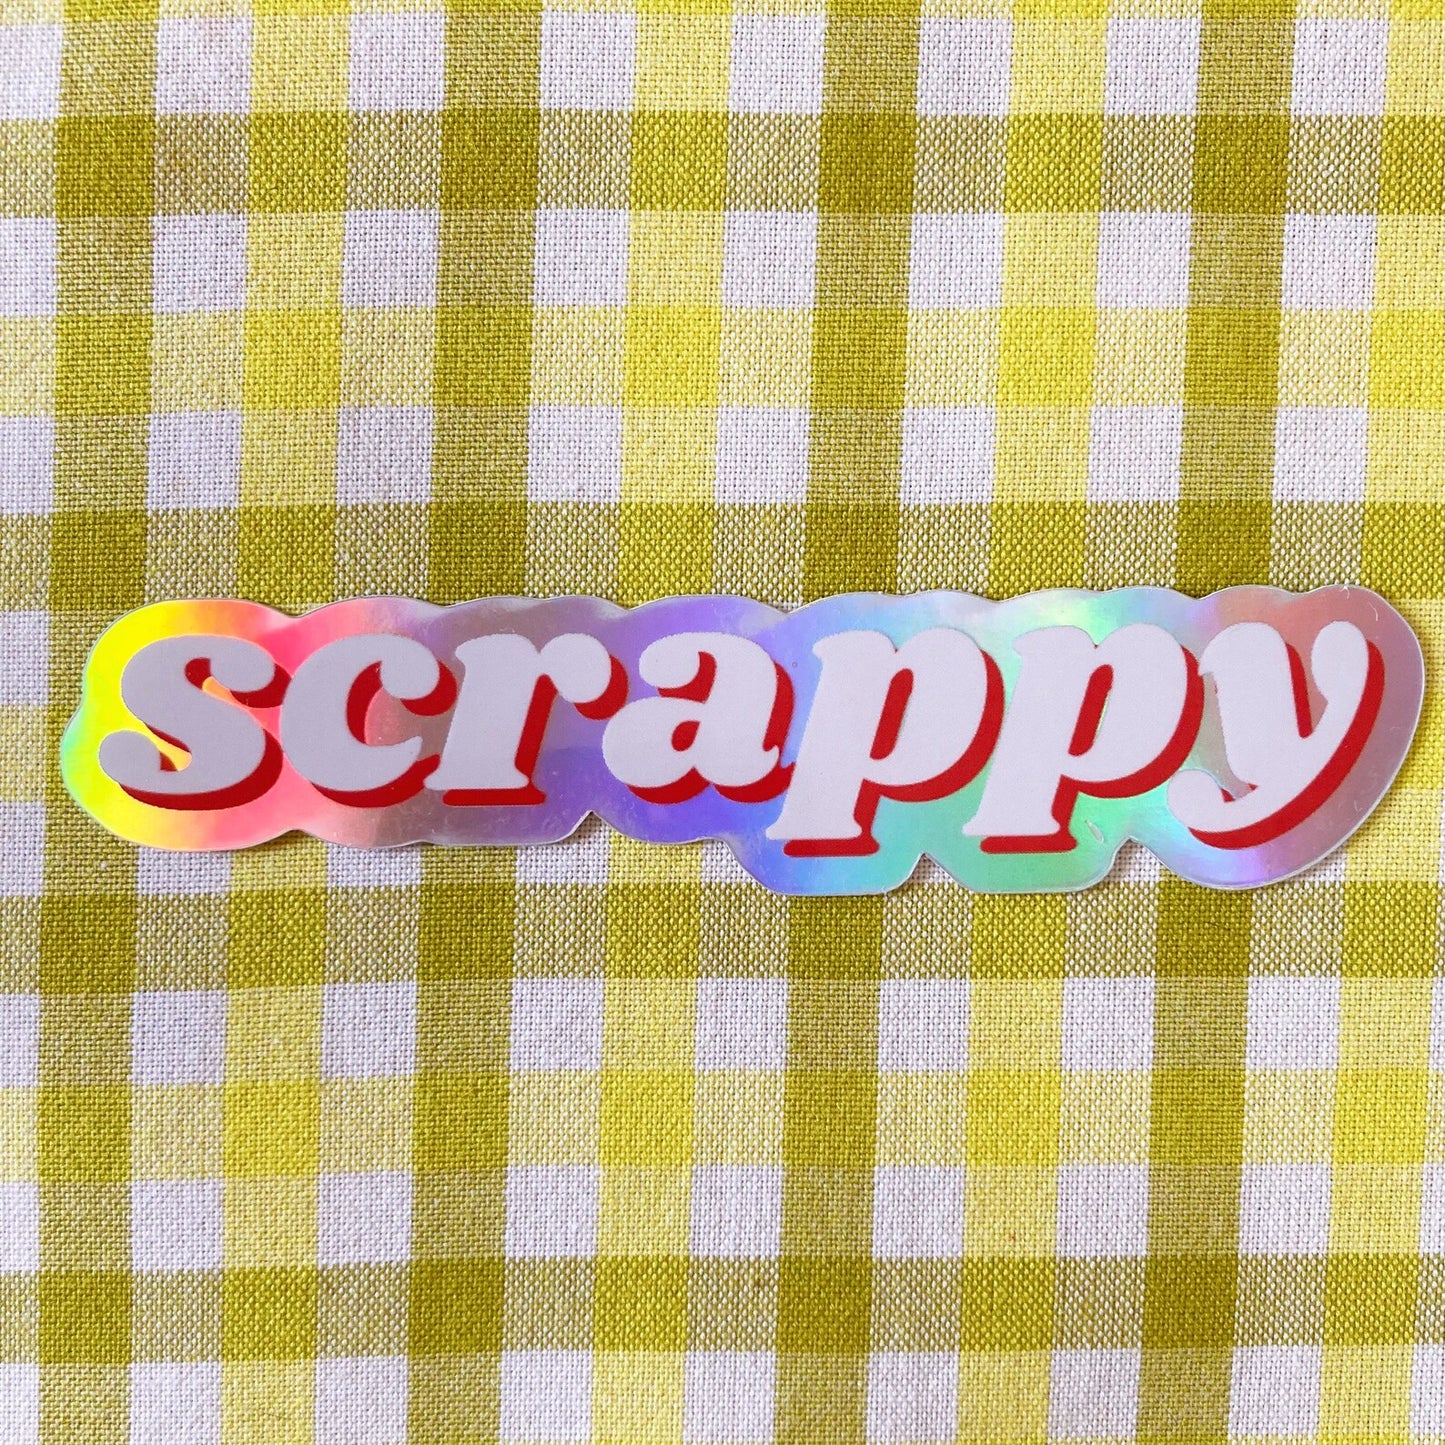 scrappy holographic sticker